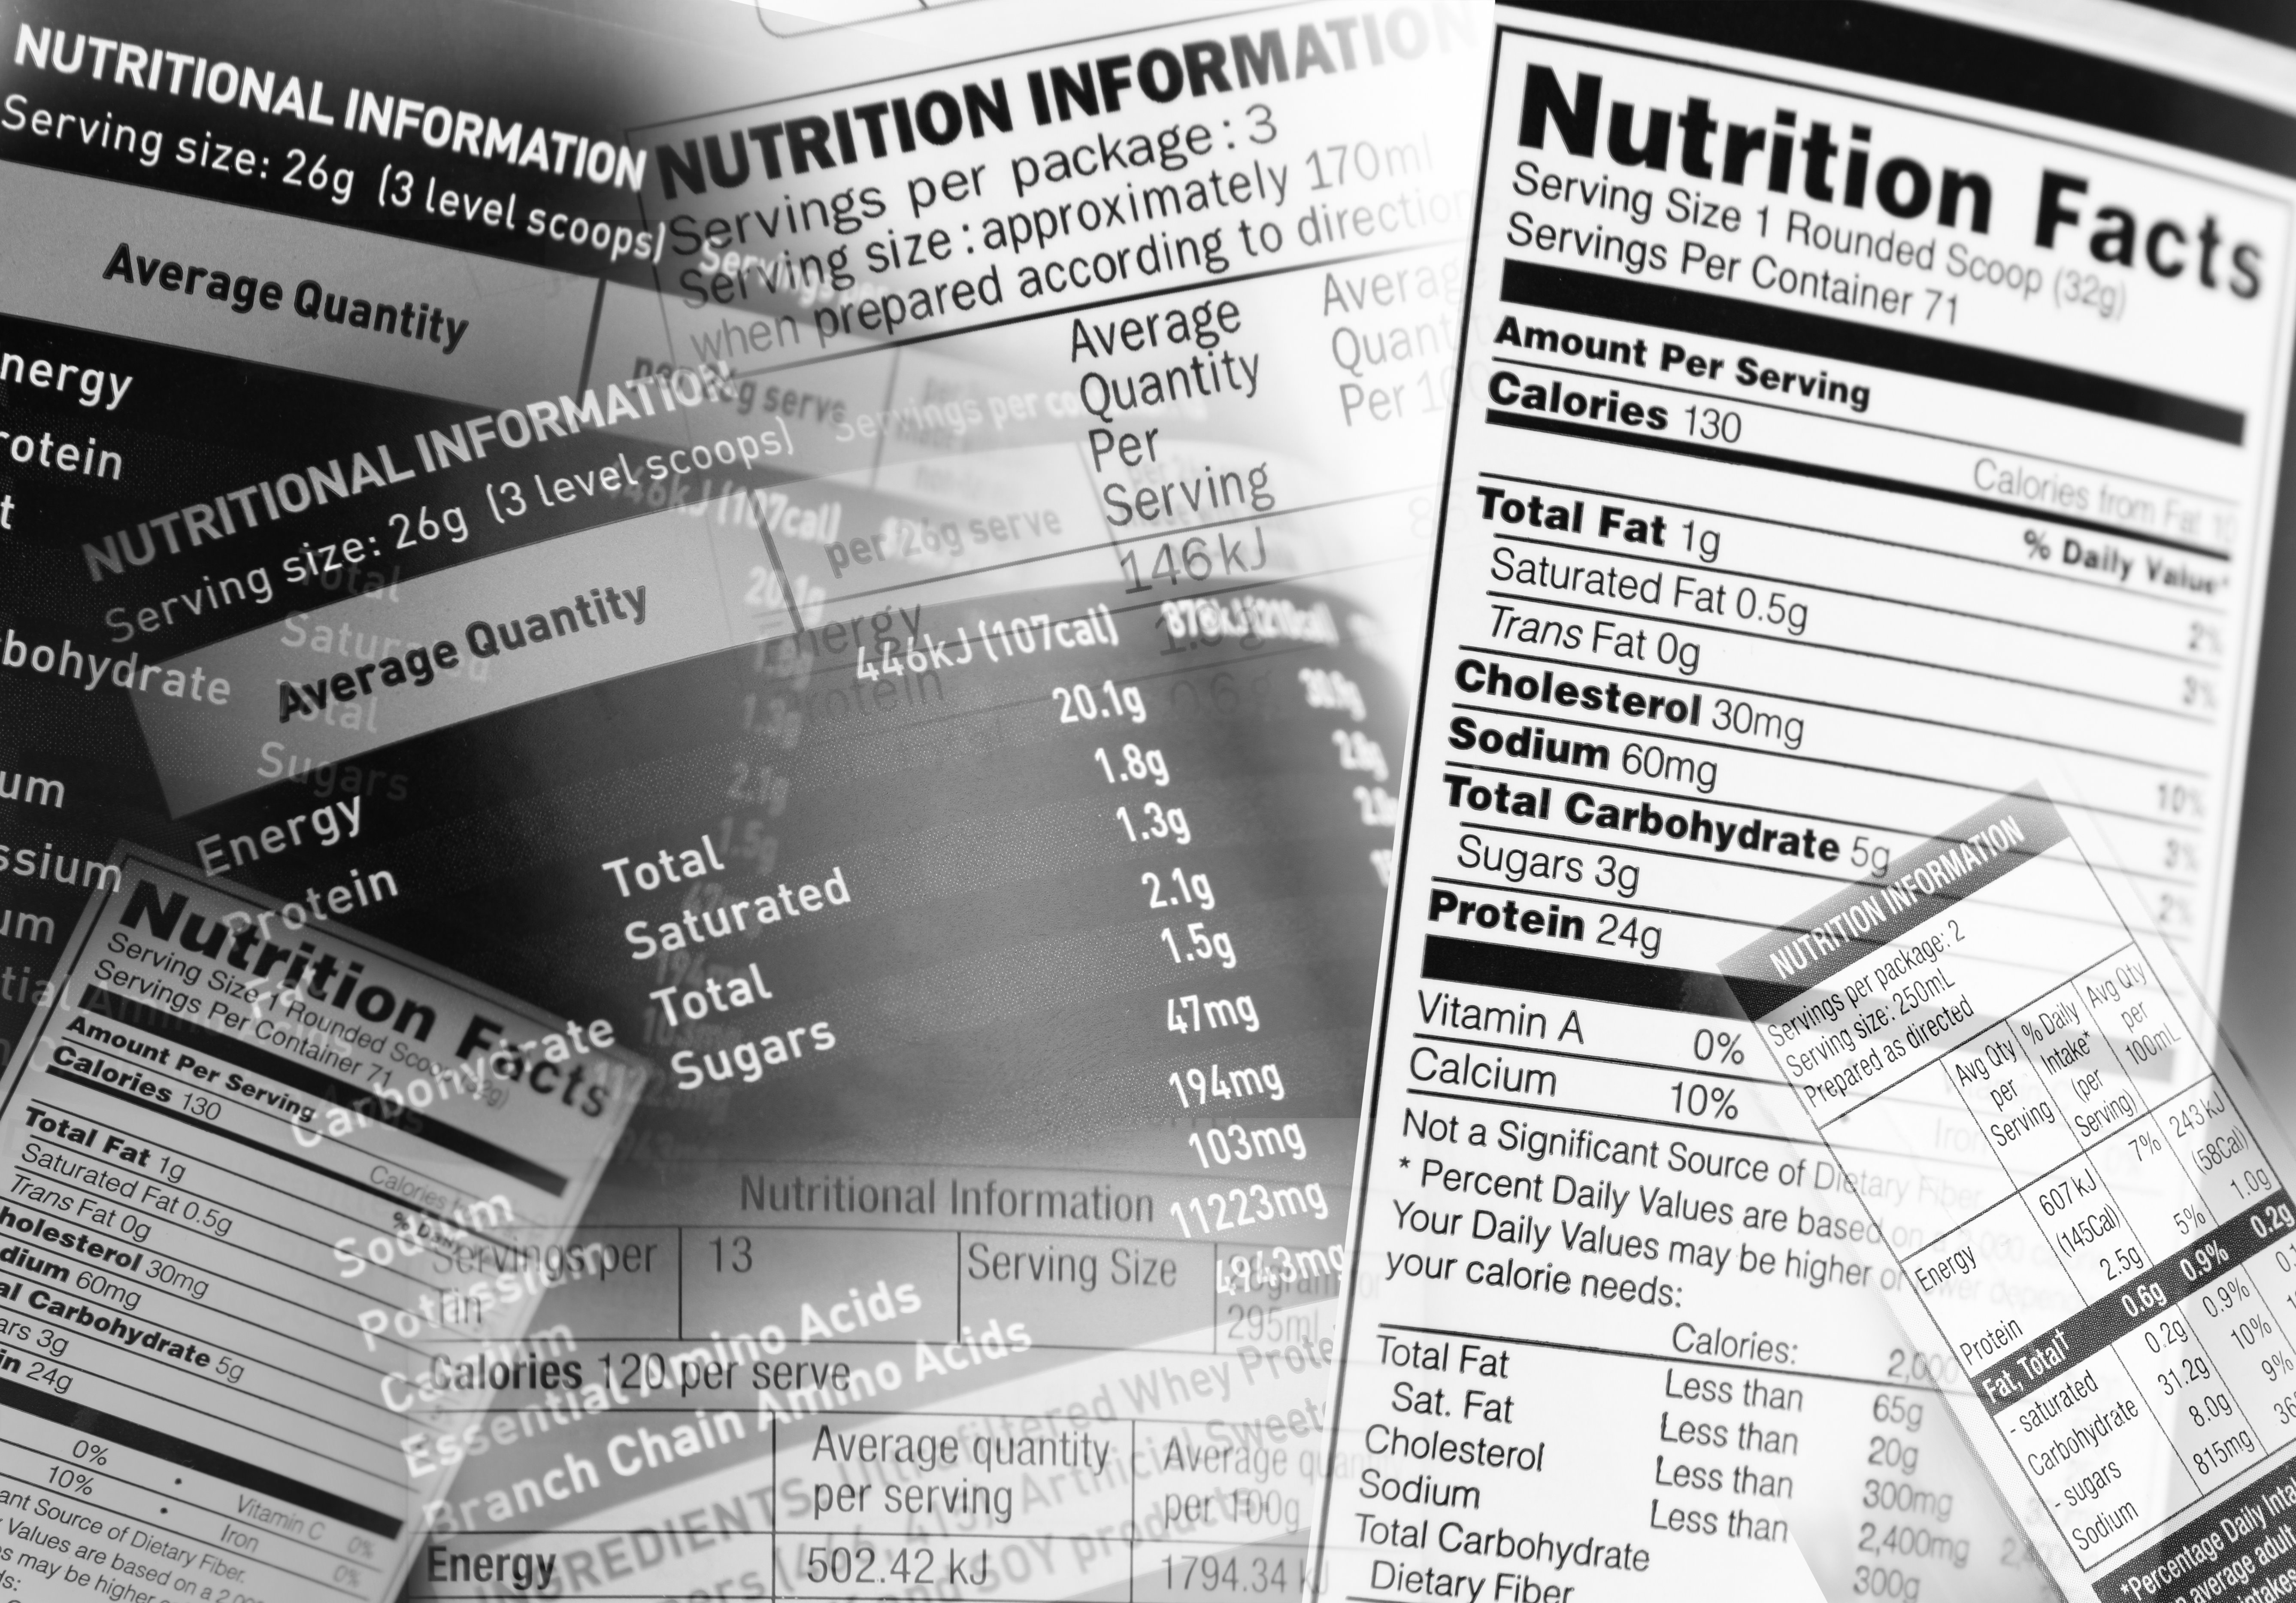 Don’t Let Nutrition Labels Scare You